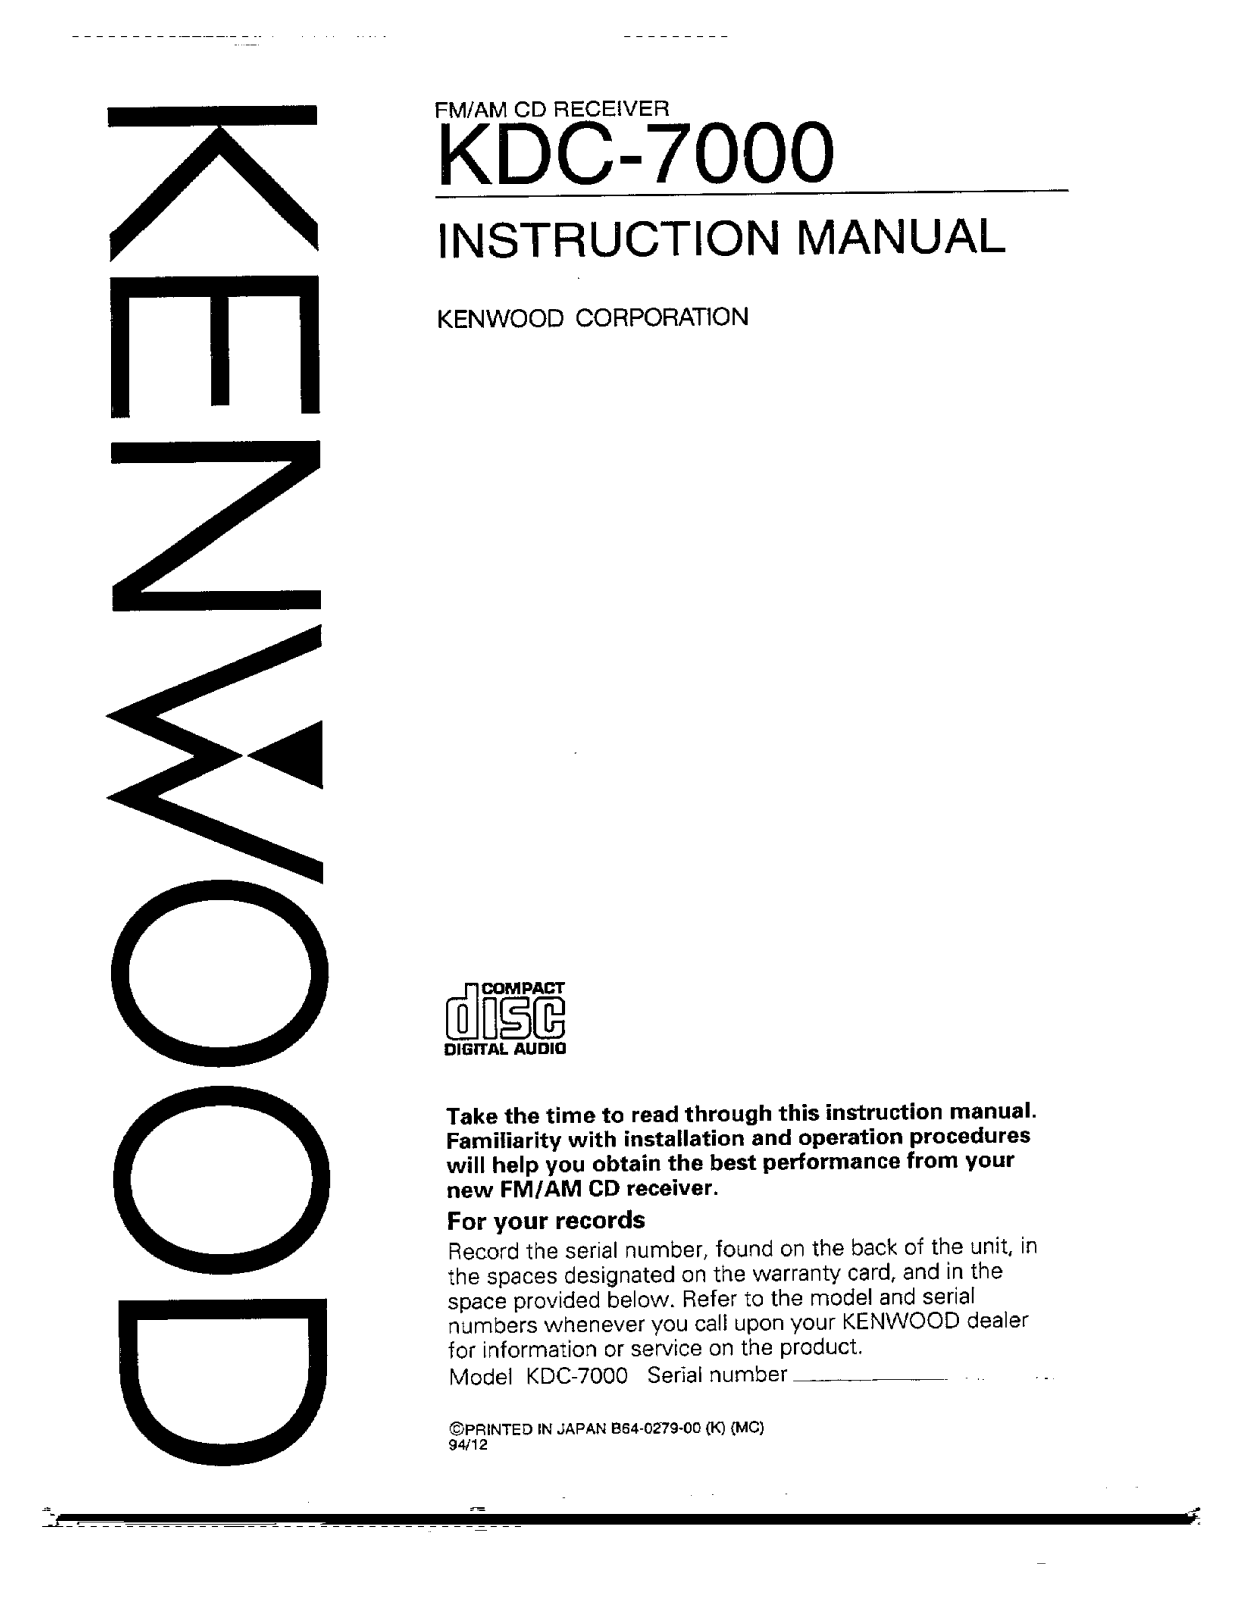 Kenwood KDC-7000 Owner's Manual